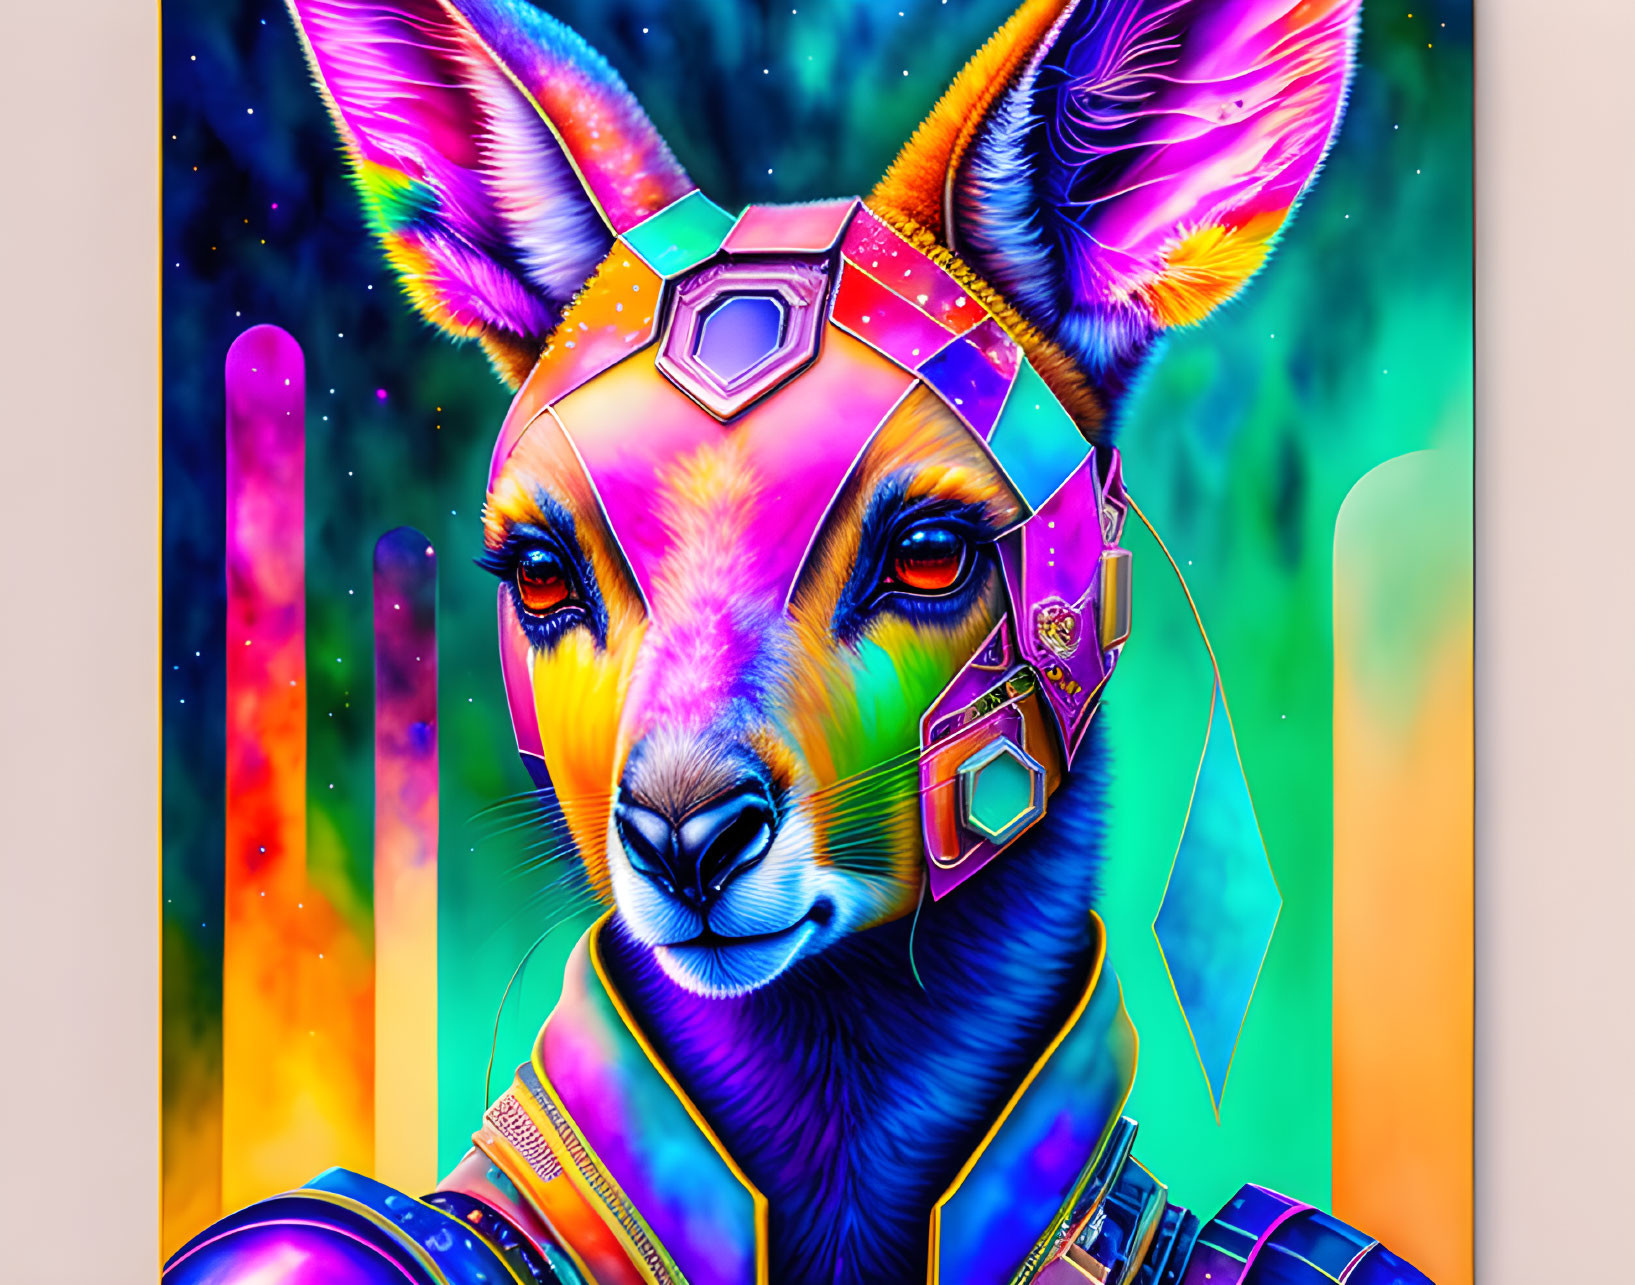 Colorful Kangaroo Artwork with Futuristic Headpiece on Neon Background